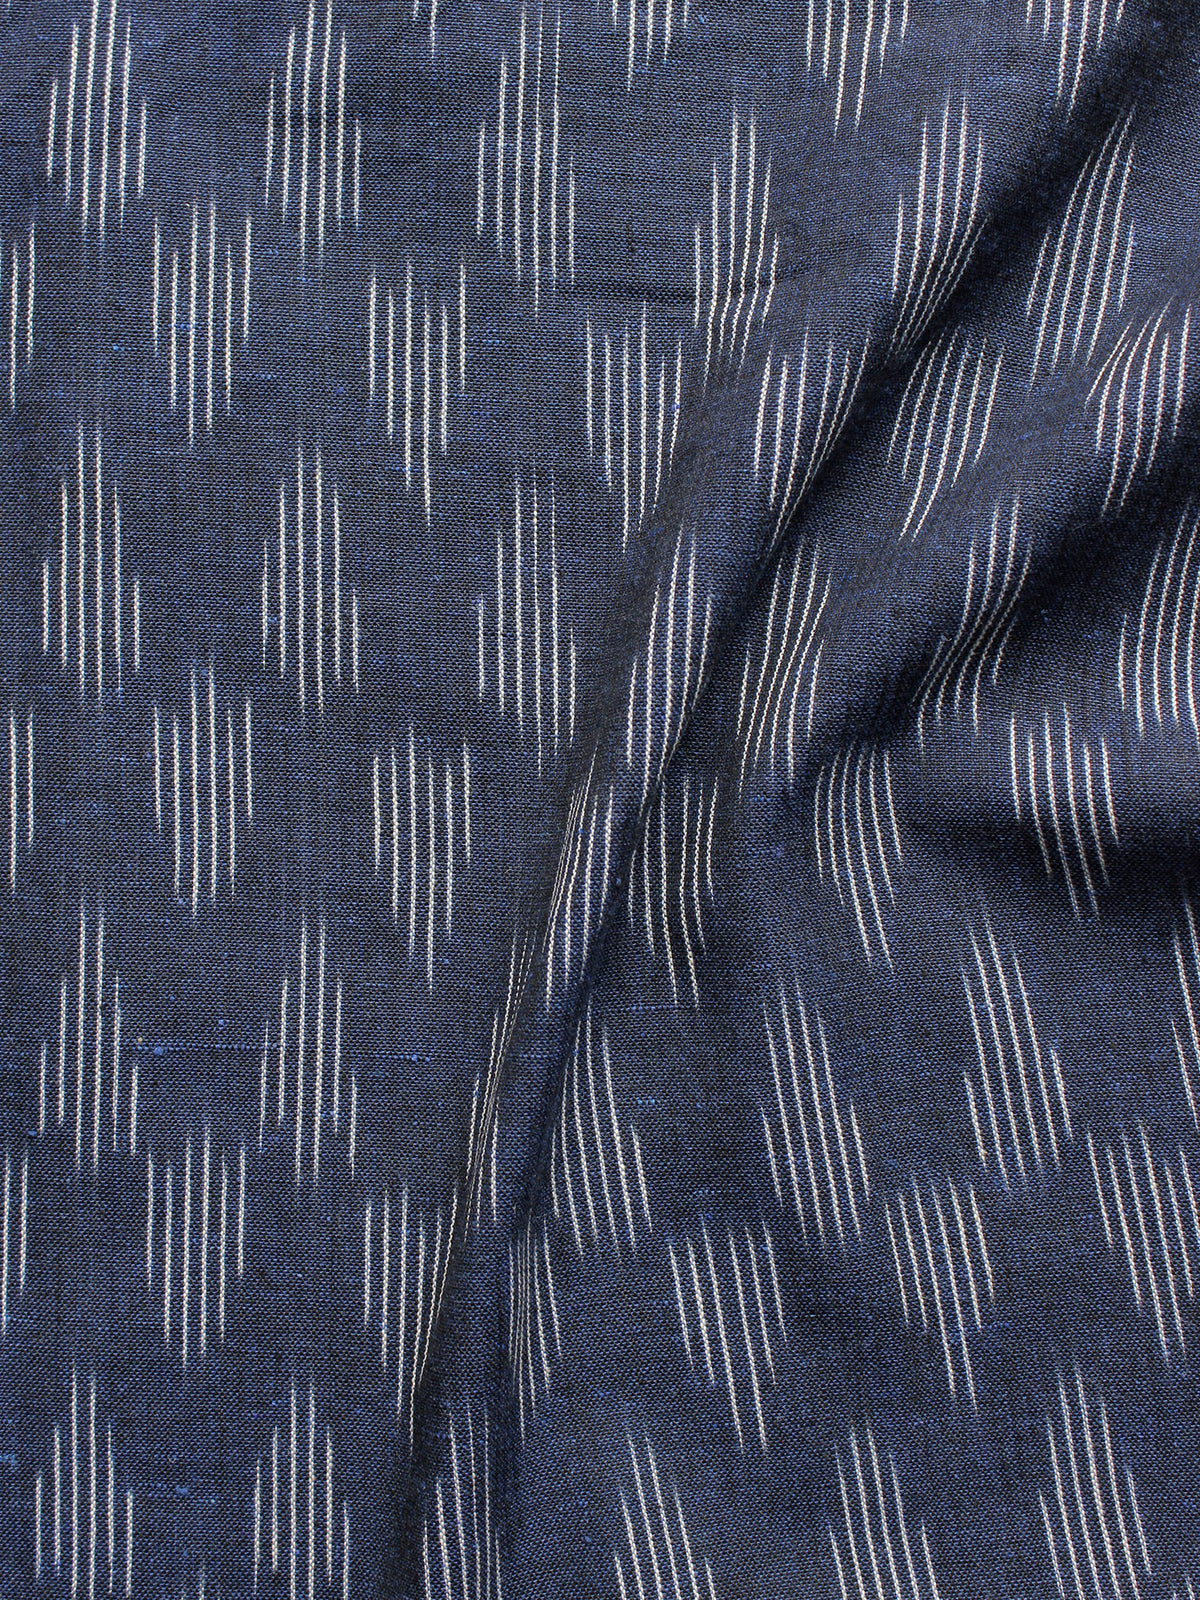 Blue White Pochampally Hand Woven Ikat Fabric Per Meter - F002F940